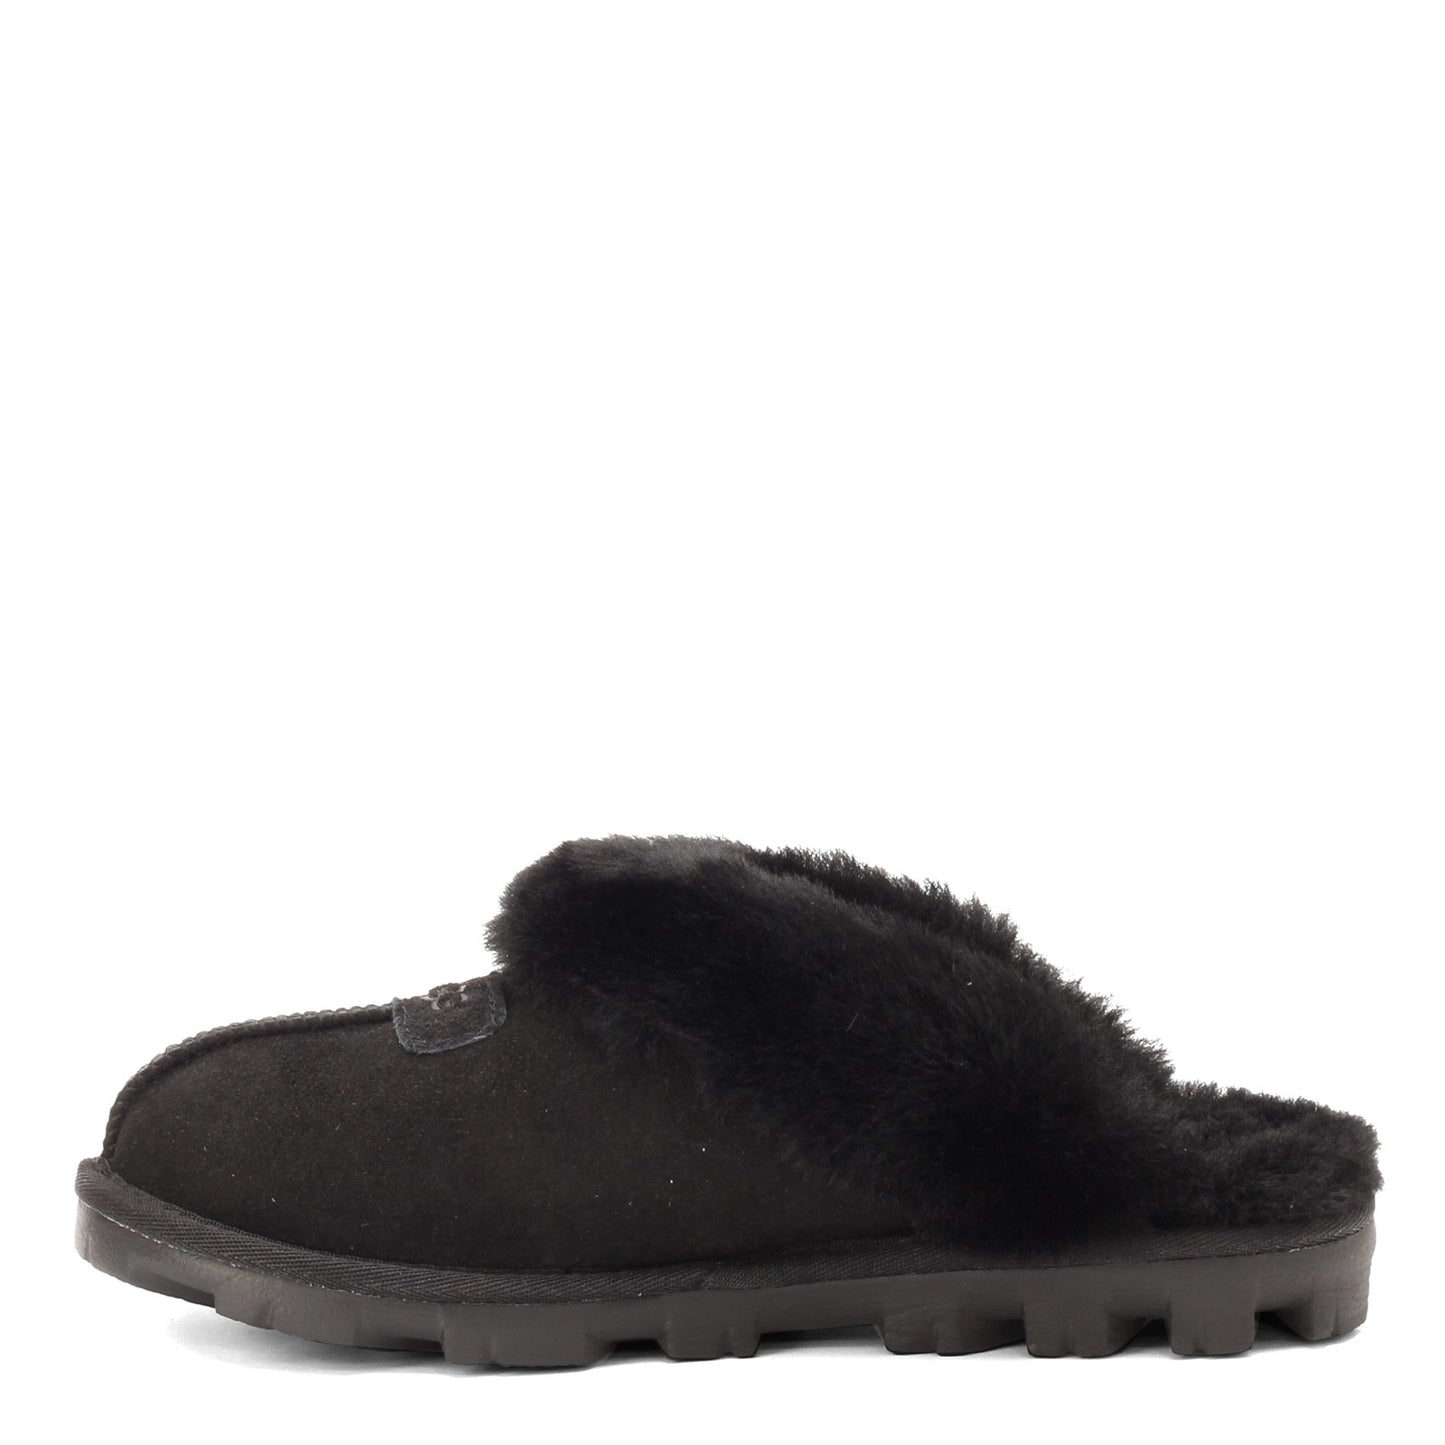 Peltz Shoes  Women's Ugg Coquette Slipper BLACK 5125-BLK